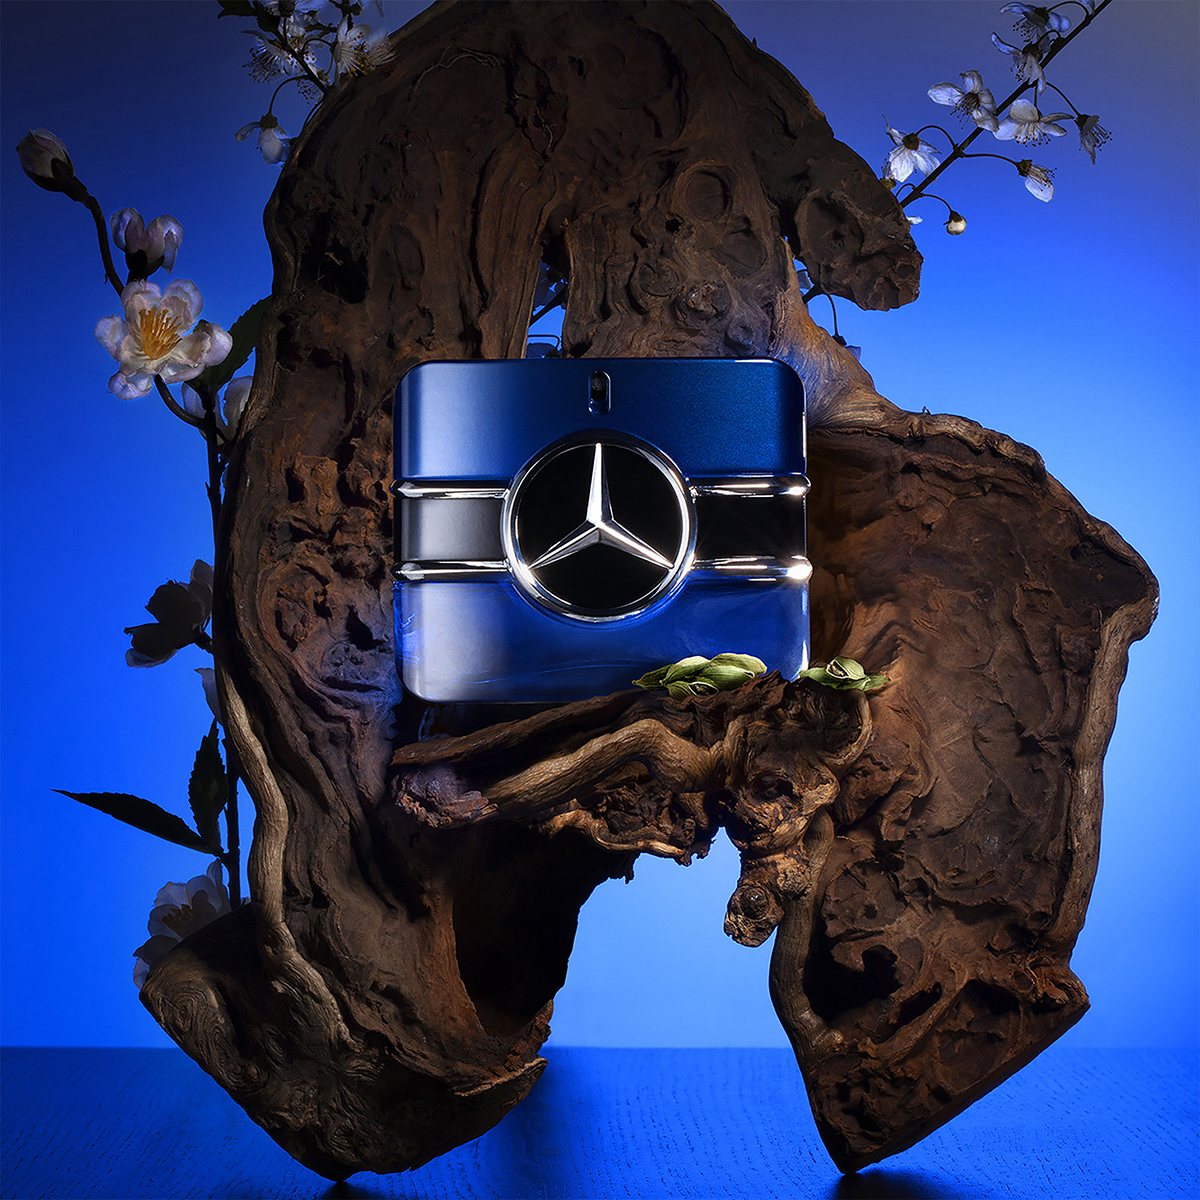 Mercedes-Benz Sign Eau De Parfum - 3.4 Oz.